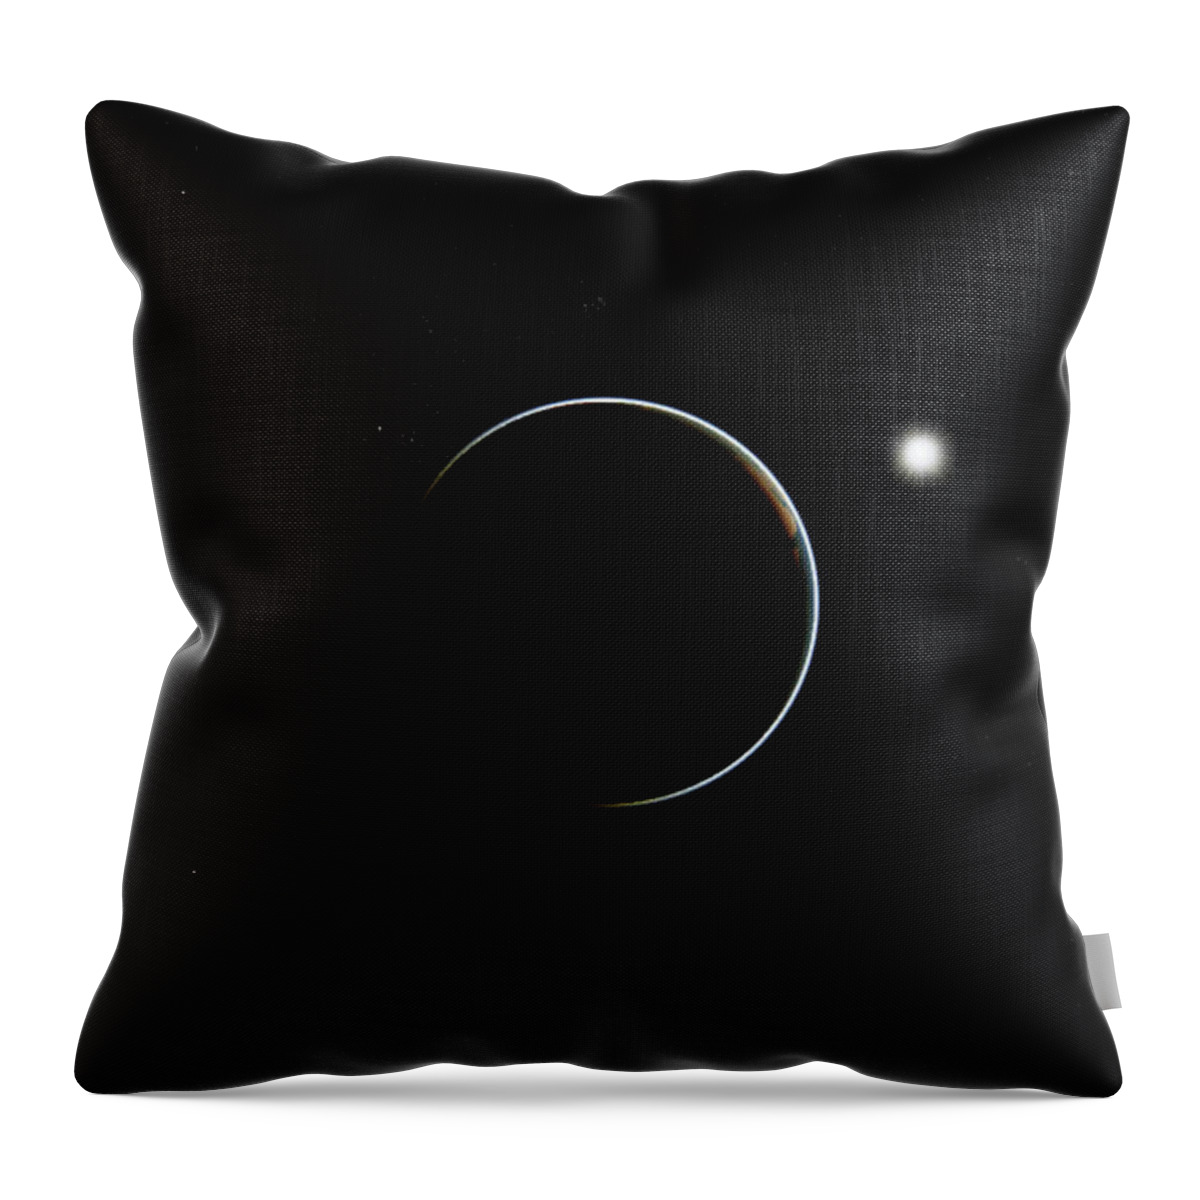 3d Throw Pillow featuring the digital art Earth crescent by Karine GADRE